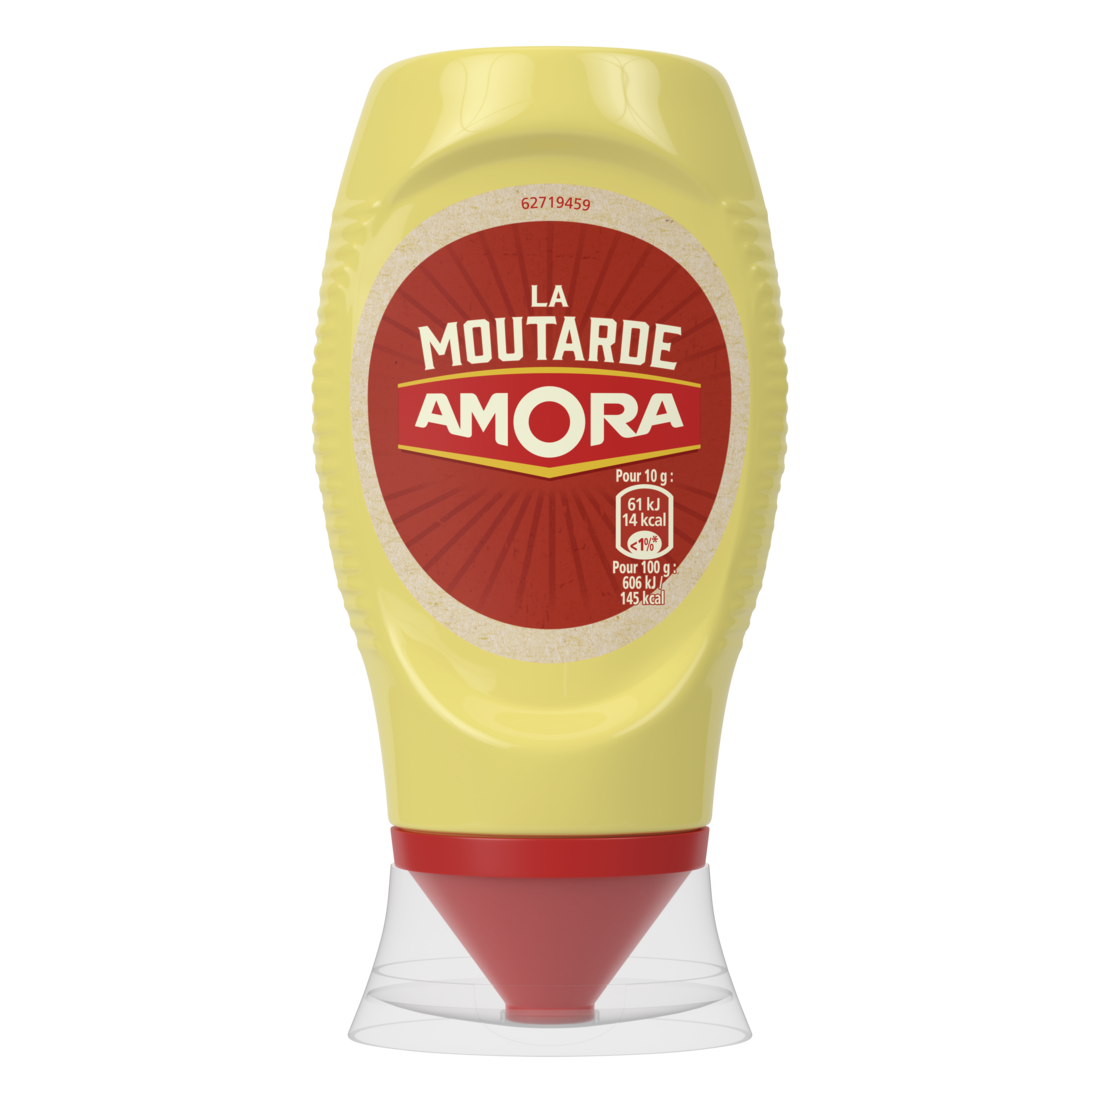 Amora Moutarde flacon souple 265g